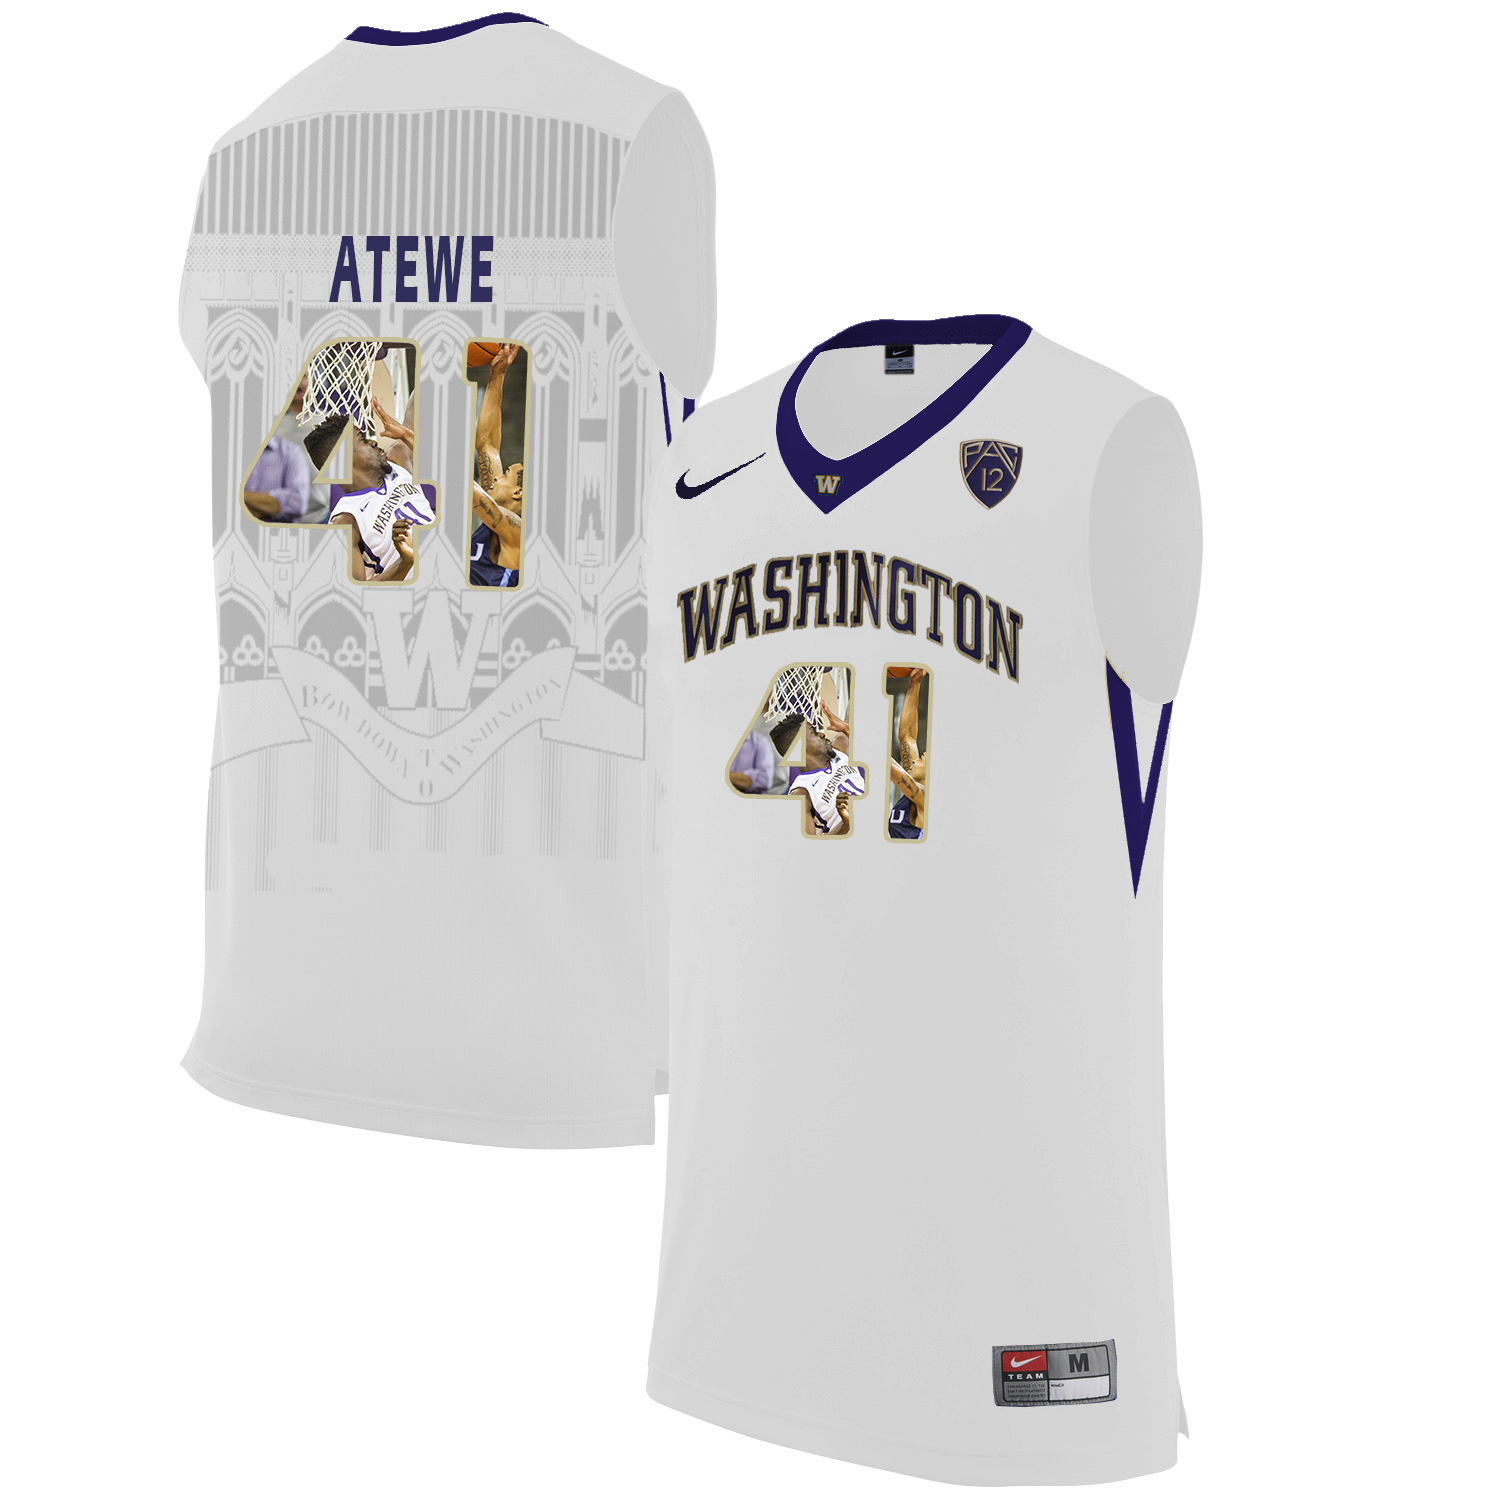 Washington Huskies 41 Matthew Atewe White With Portait College Basketball Jersey - Click Image to Close